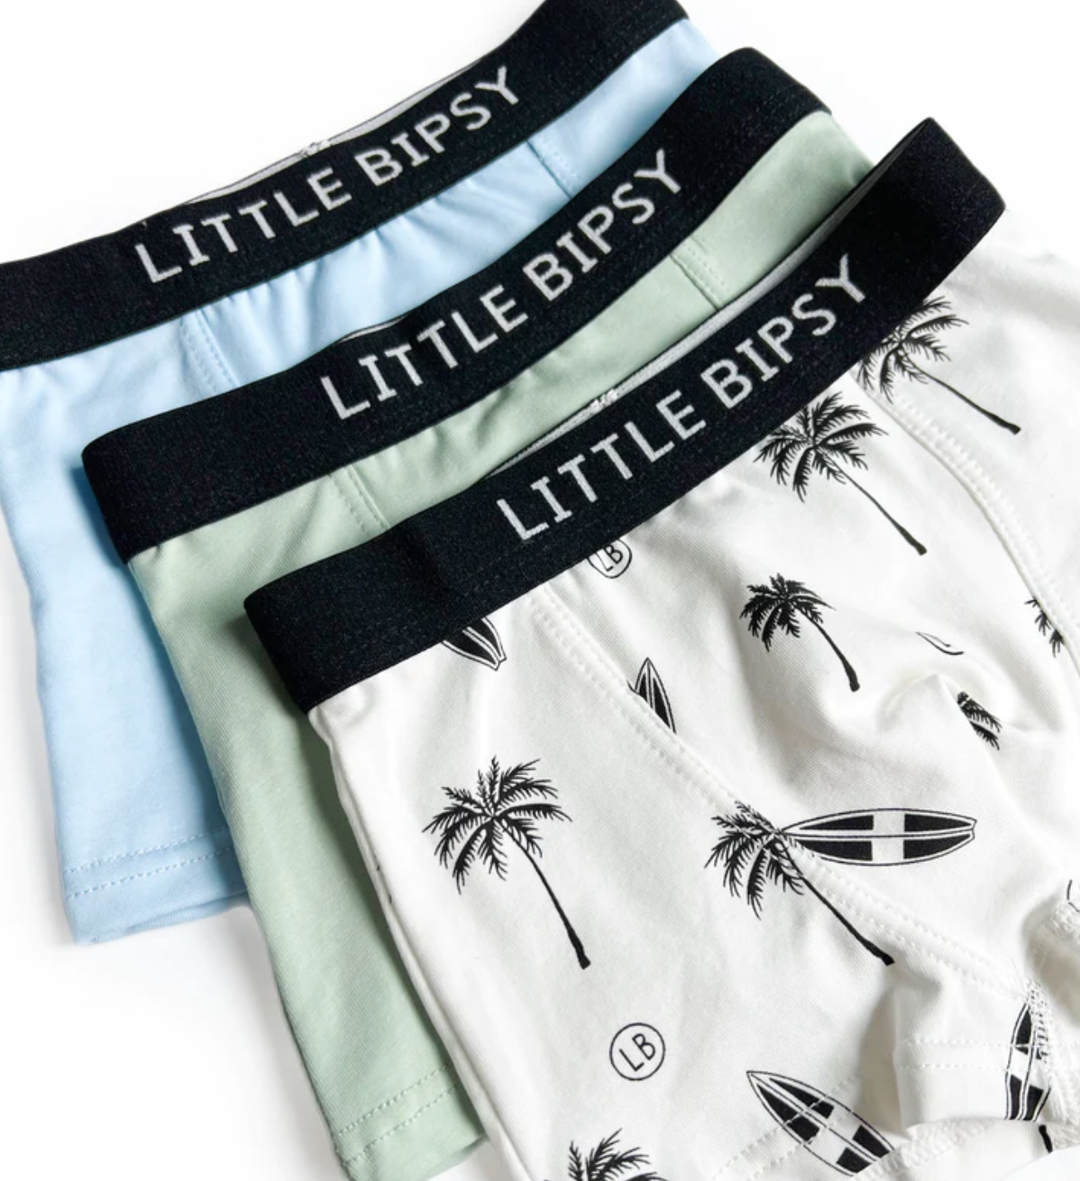 Little Bipsy - Surf's Up Boxer Briefs 3-Pack